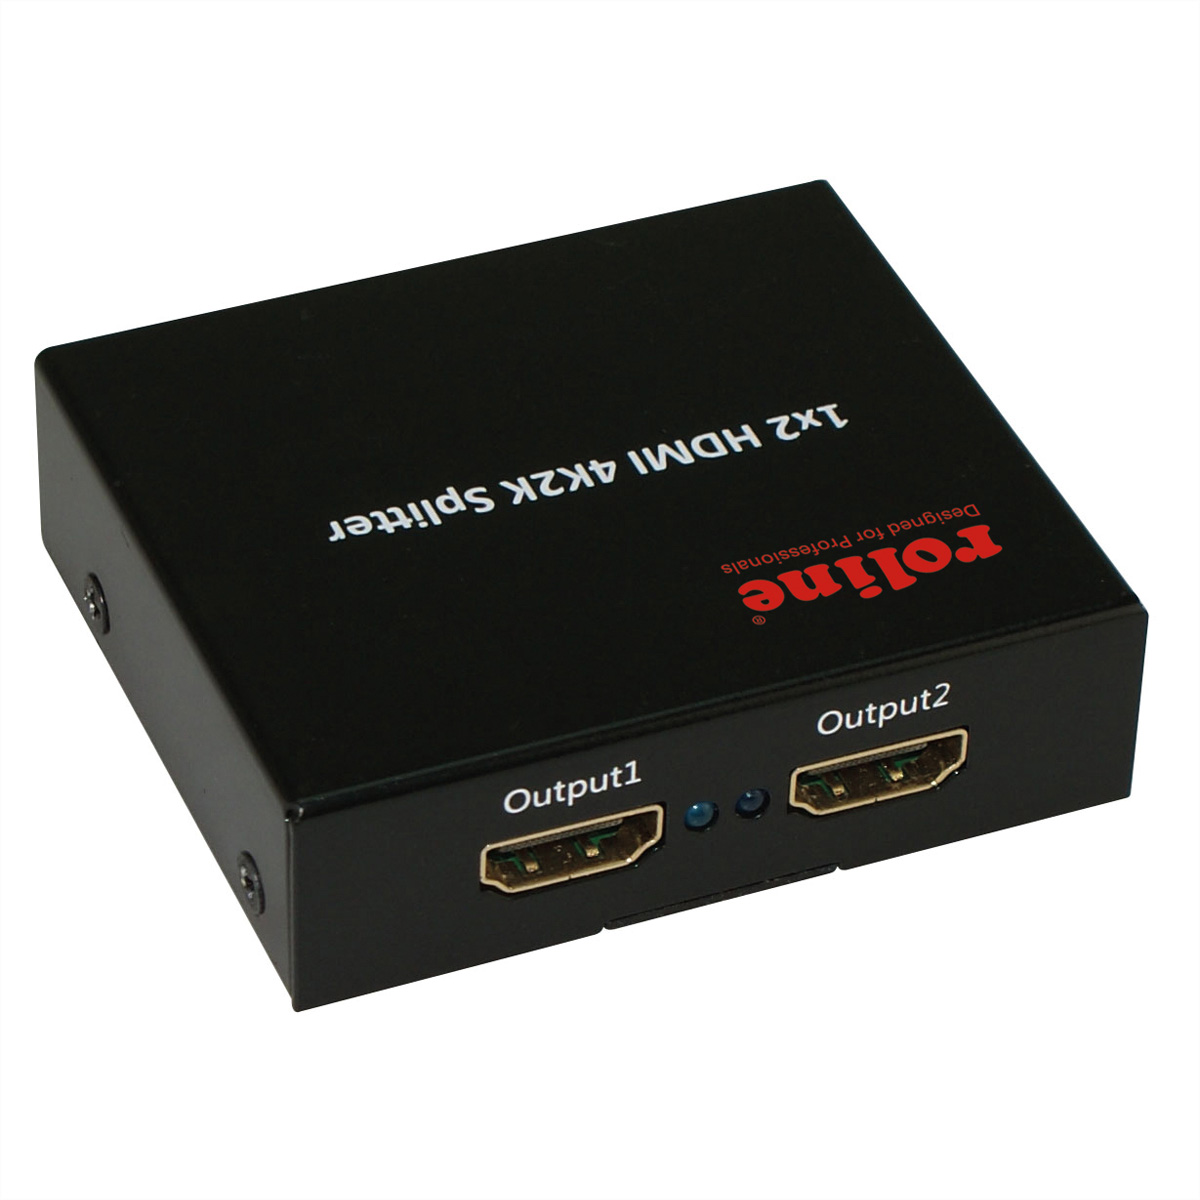 ROLINE HDMI HDMI-Video-Splitter Video-Splitter, 2fach